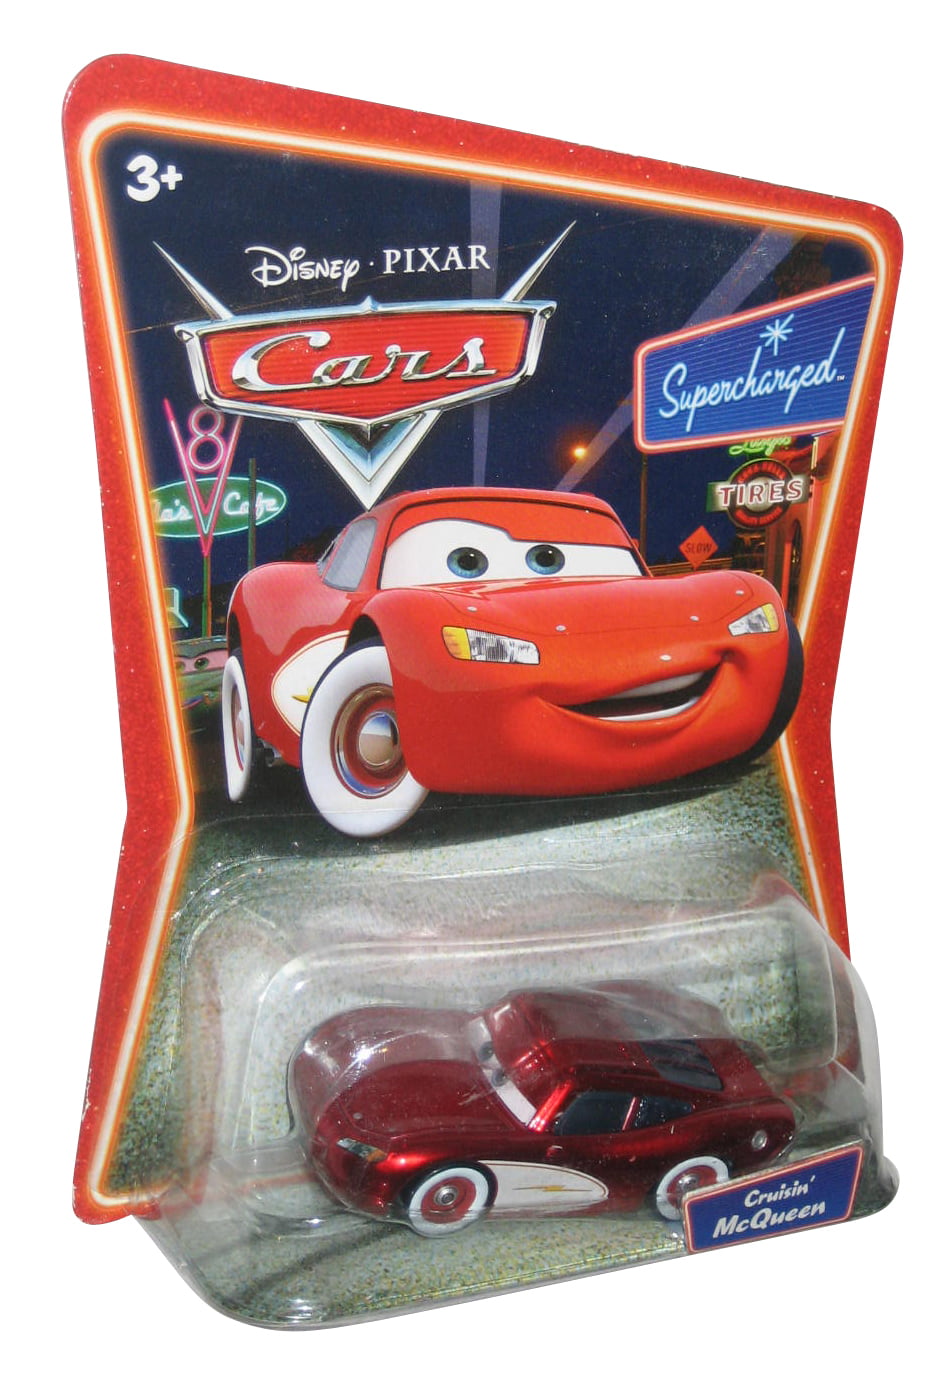 Disney Pixar Cars Supercharged Lightning McQueen L5251 Mattel for sale online 